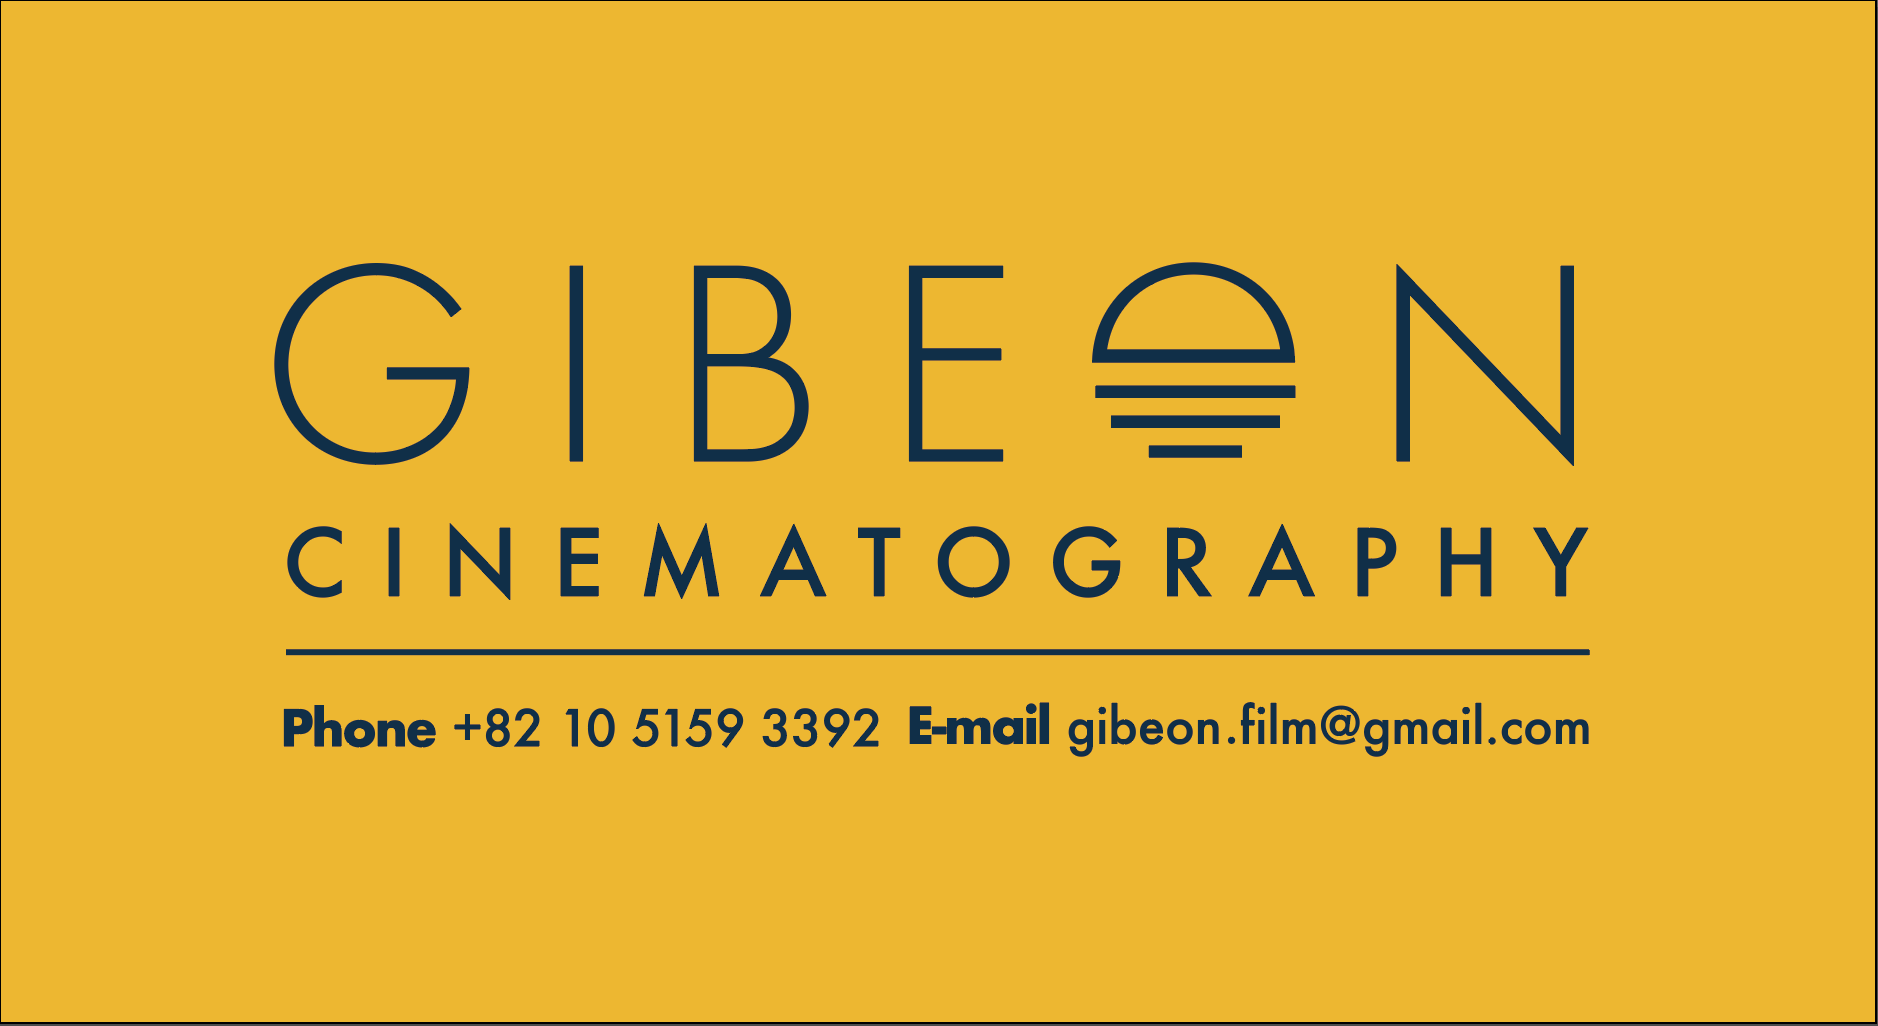 GIBEON, CO., LTD. logo image